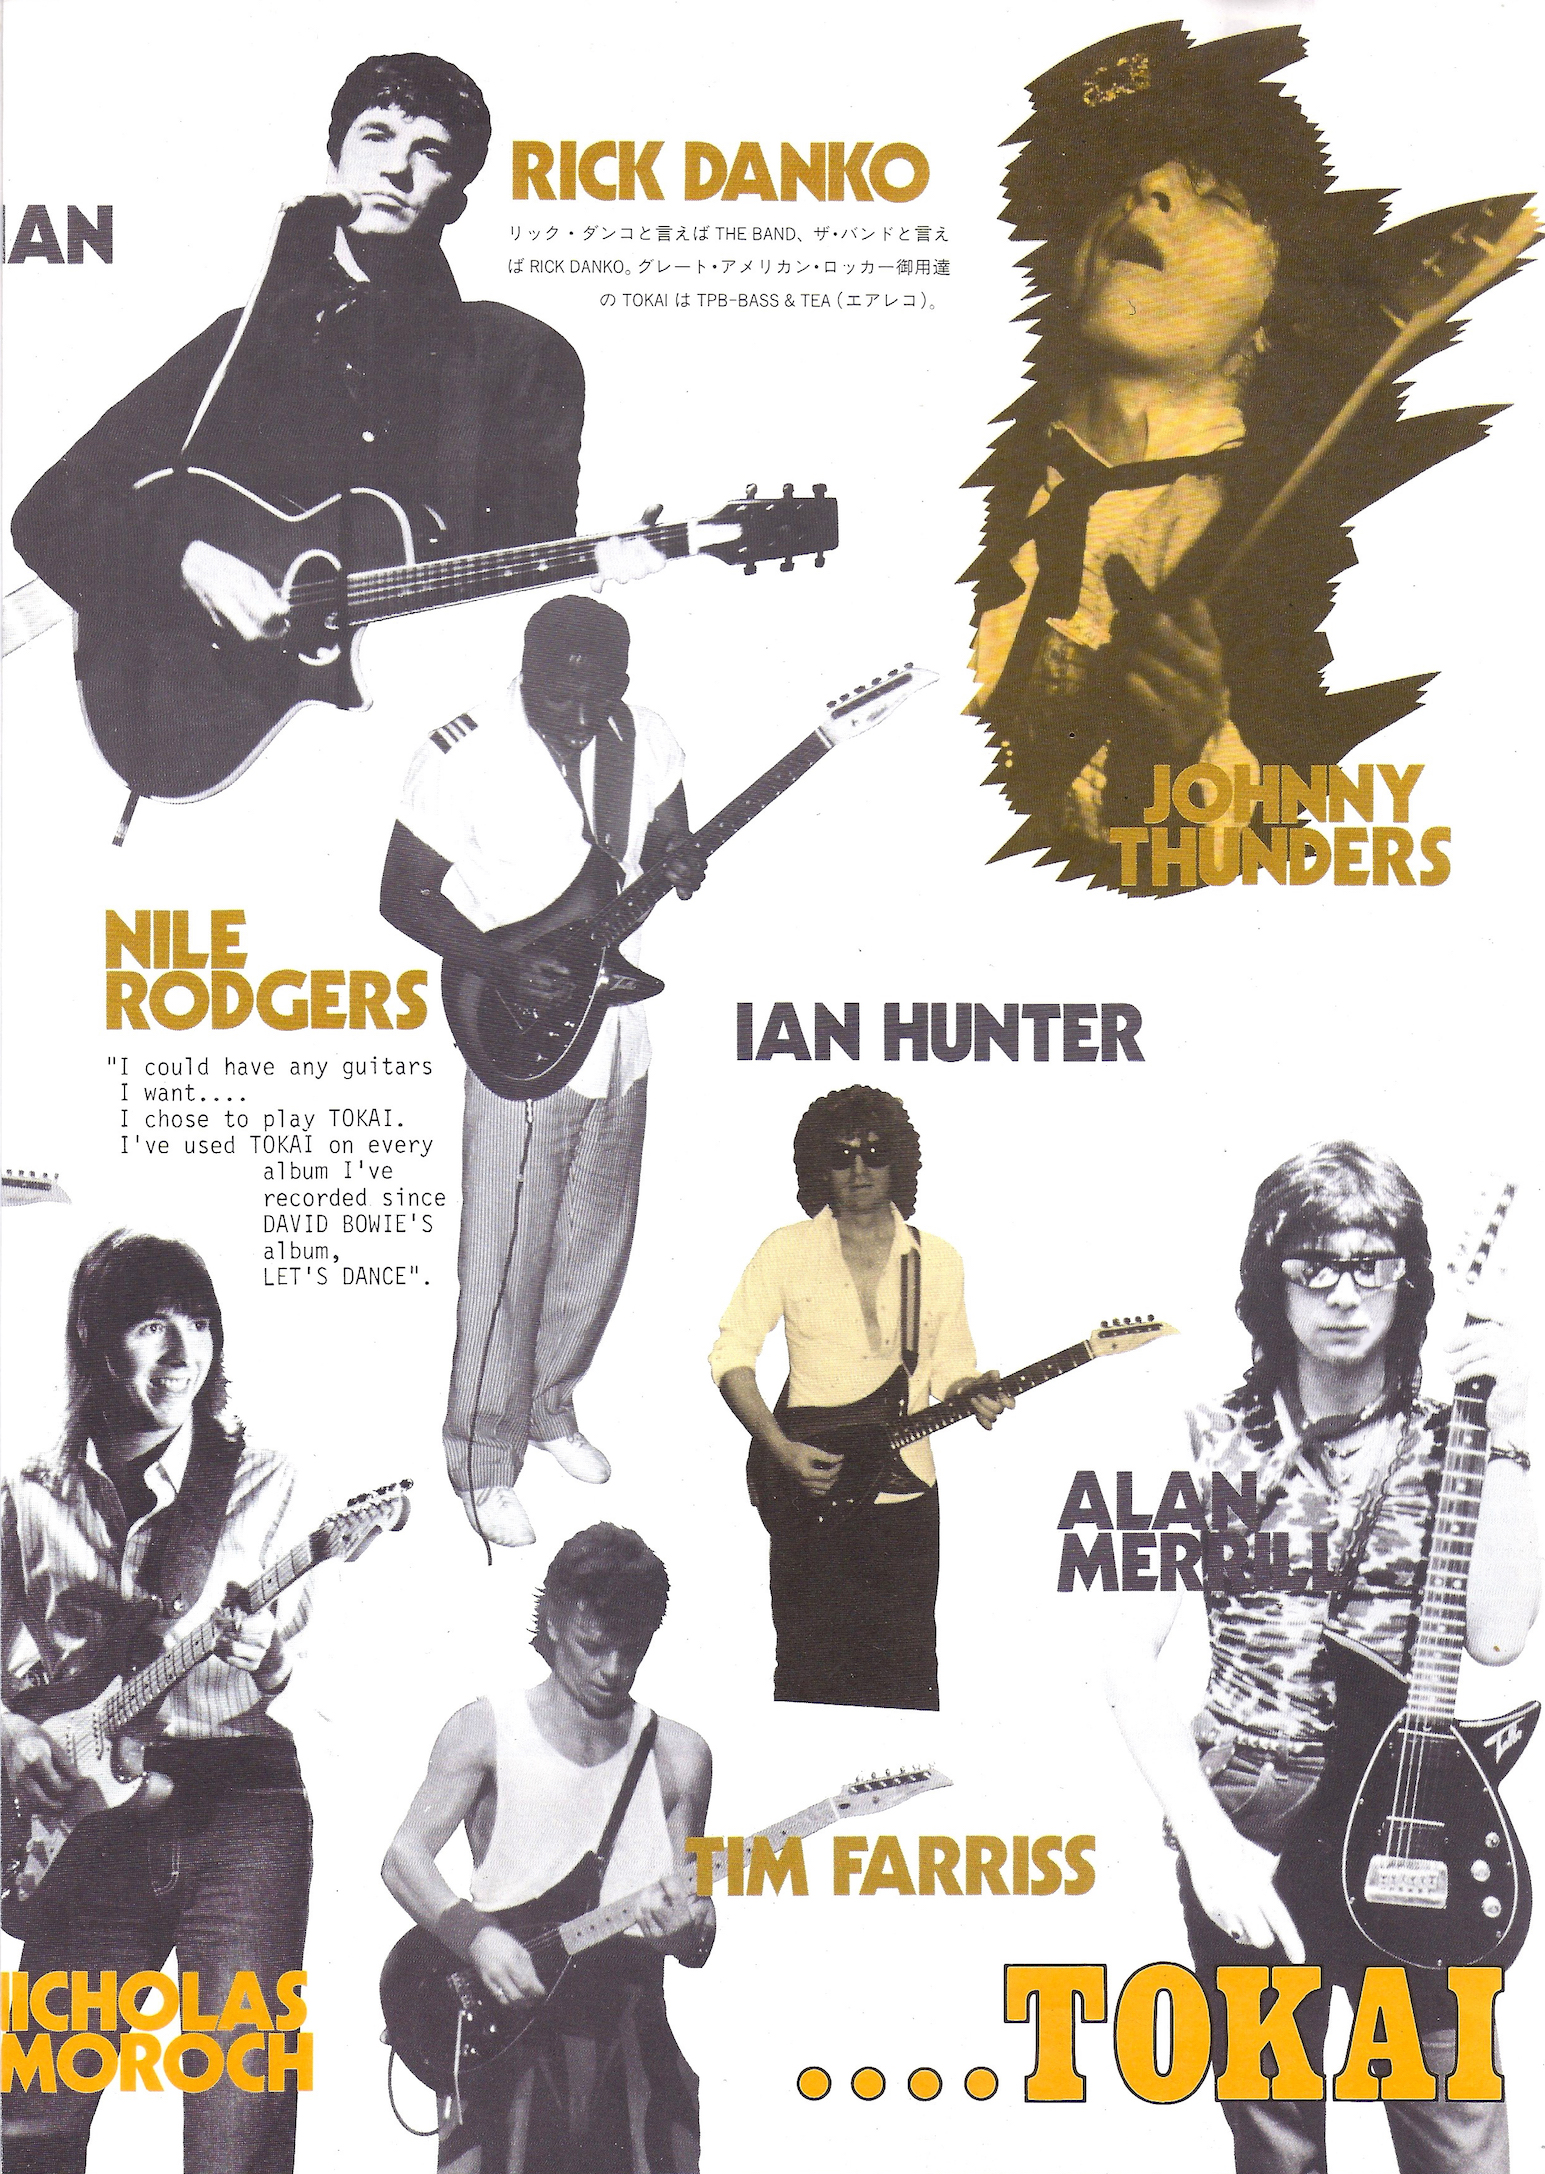 Alan Merrill in a Tokai guitar ad, 1983.